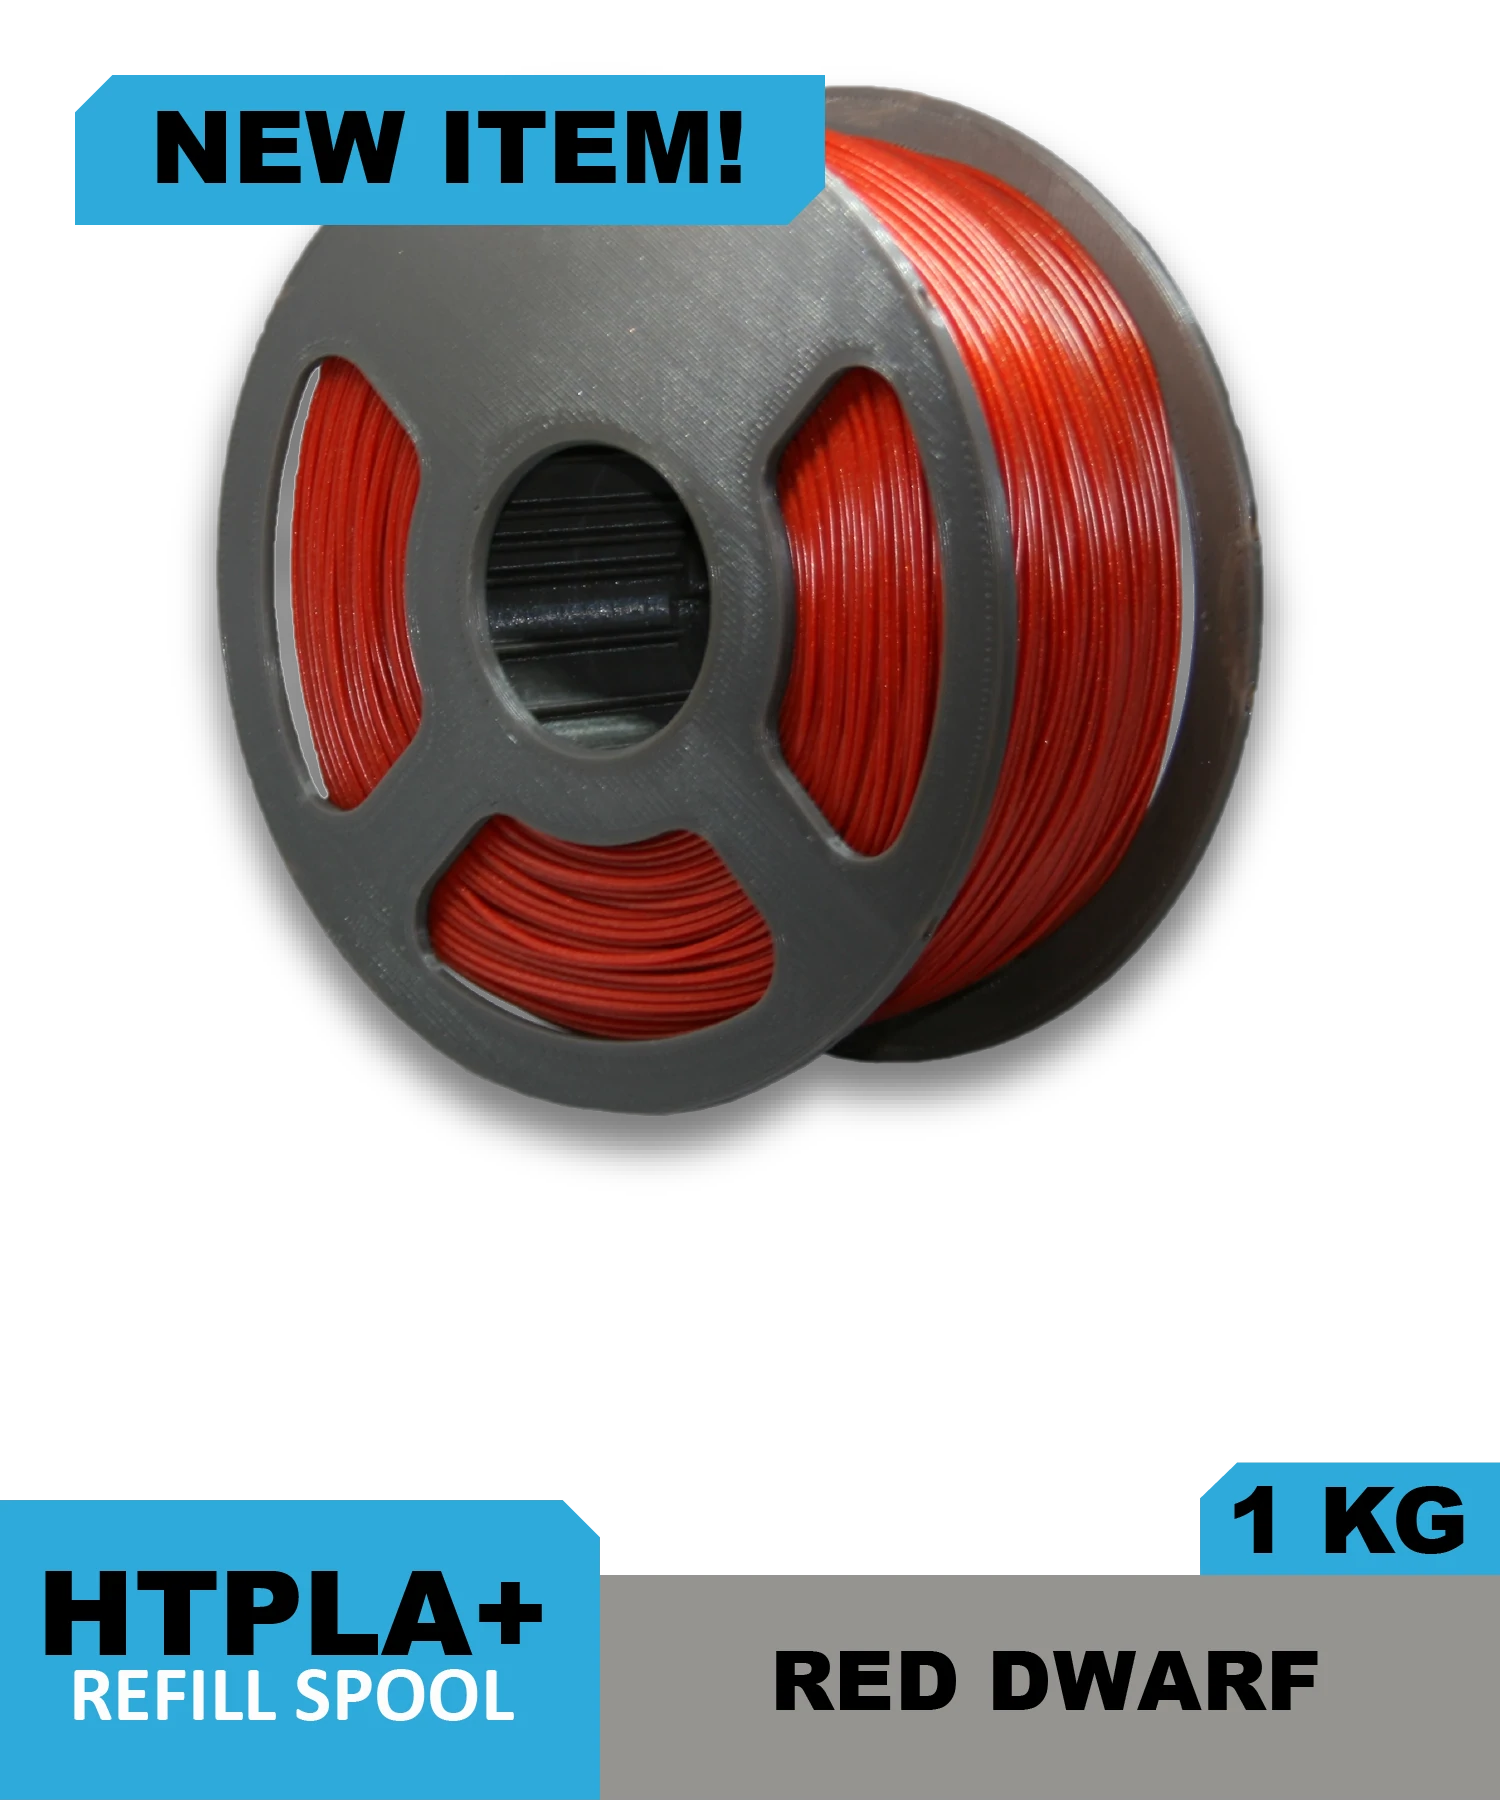 HTPLA - Red Dwarf